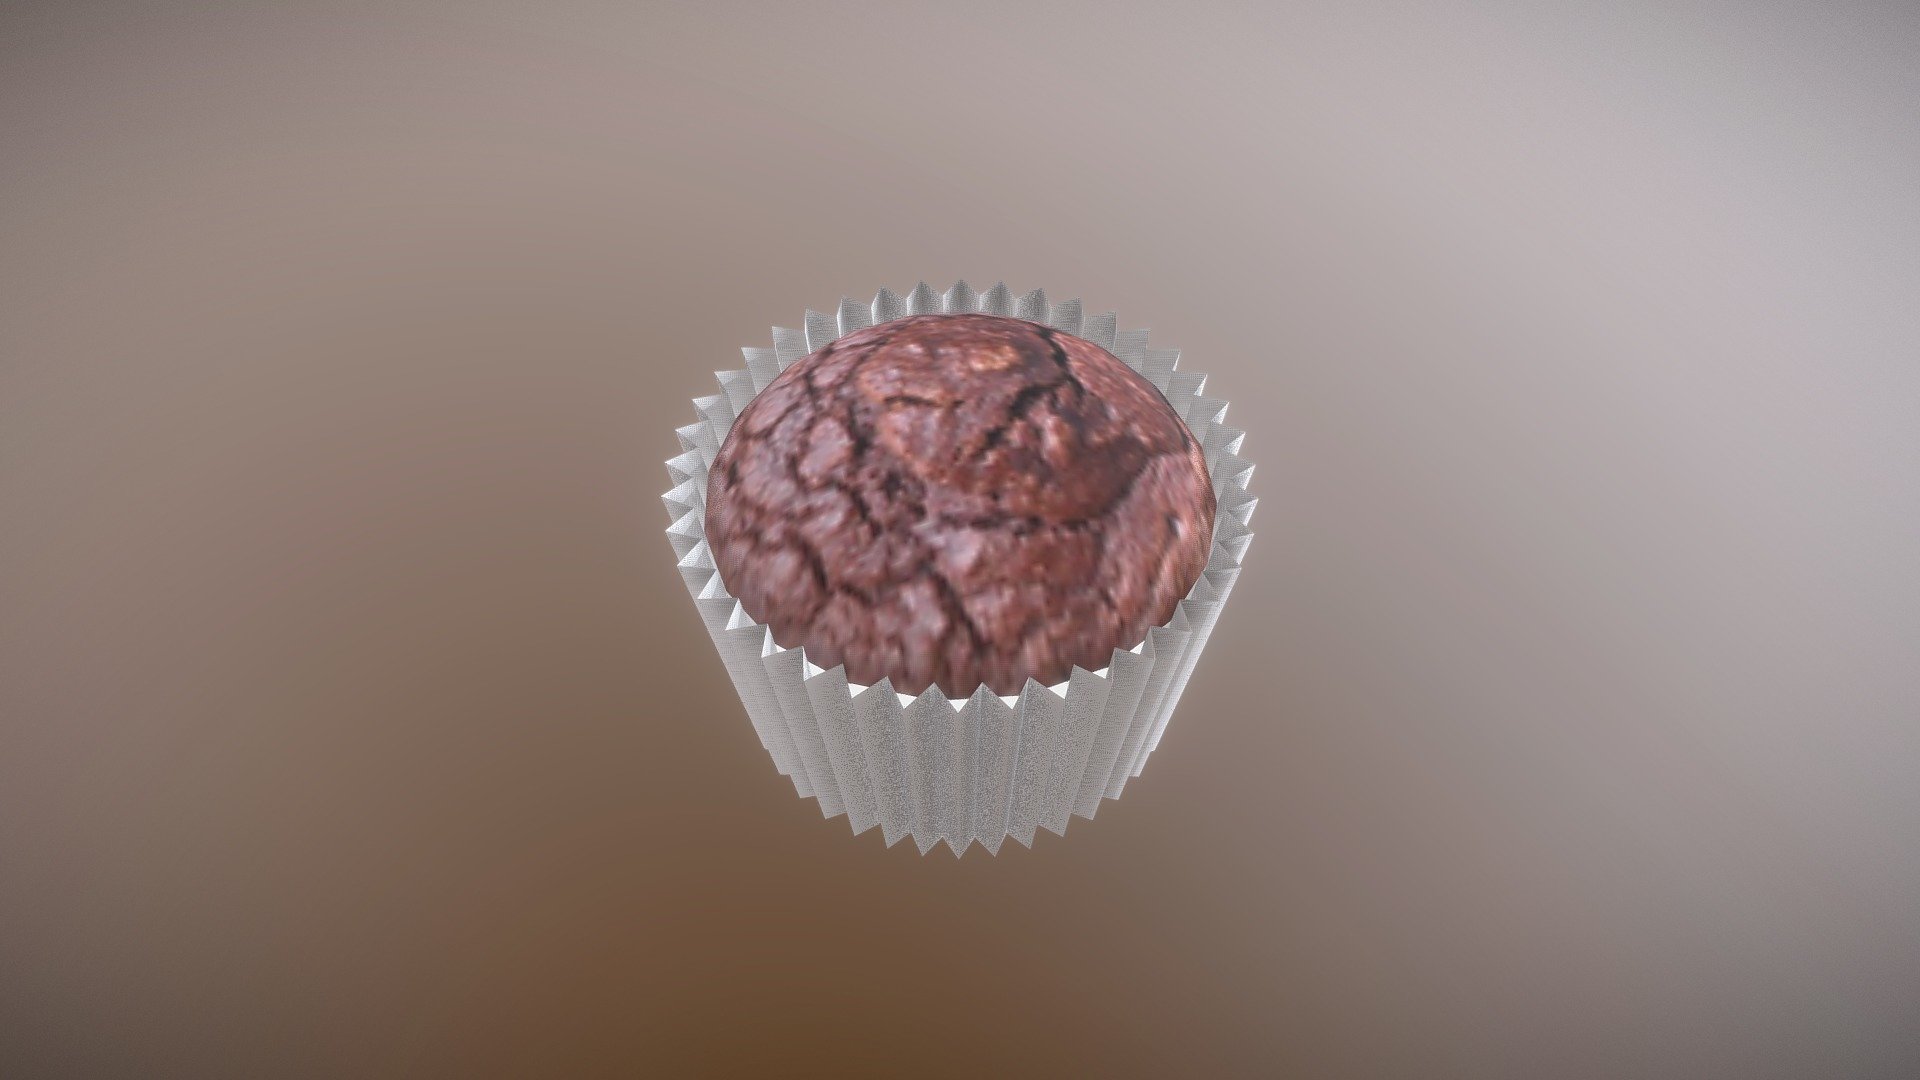 Chocolate Muffin (School Project)